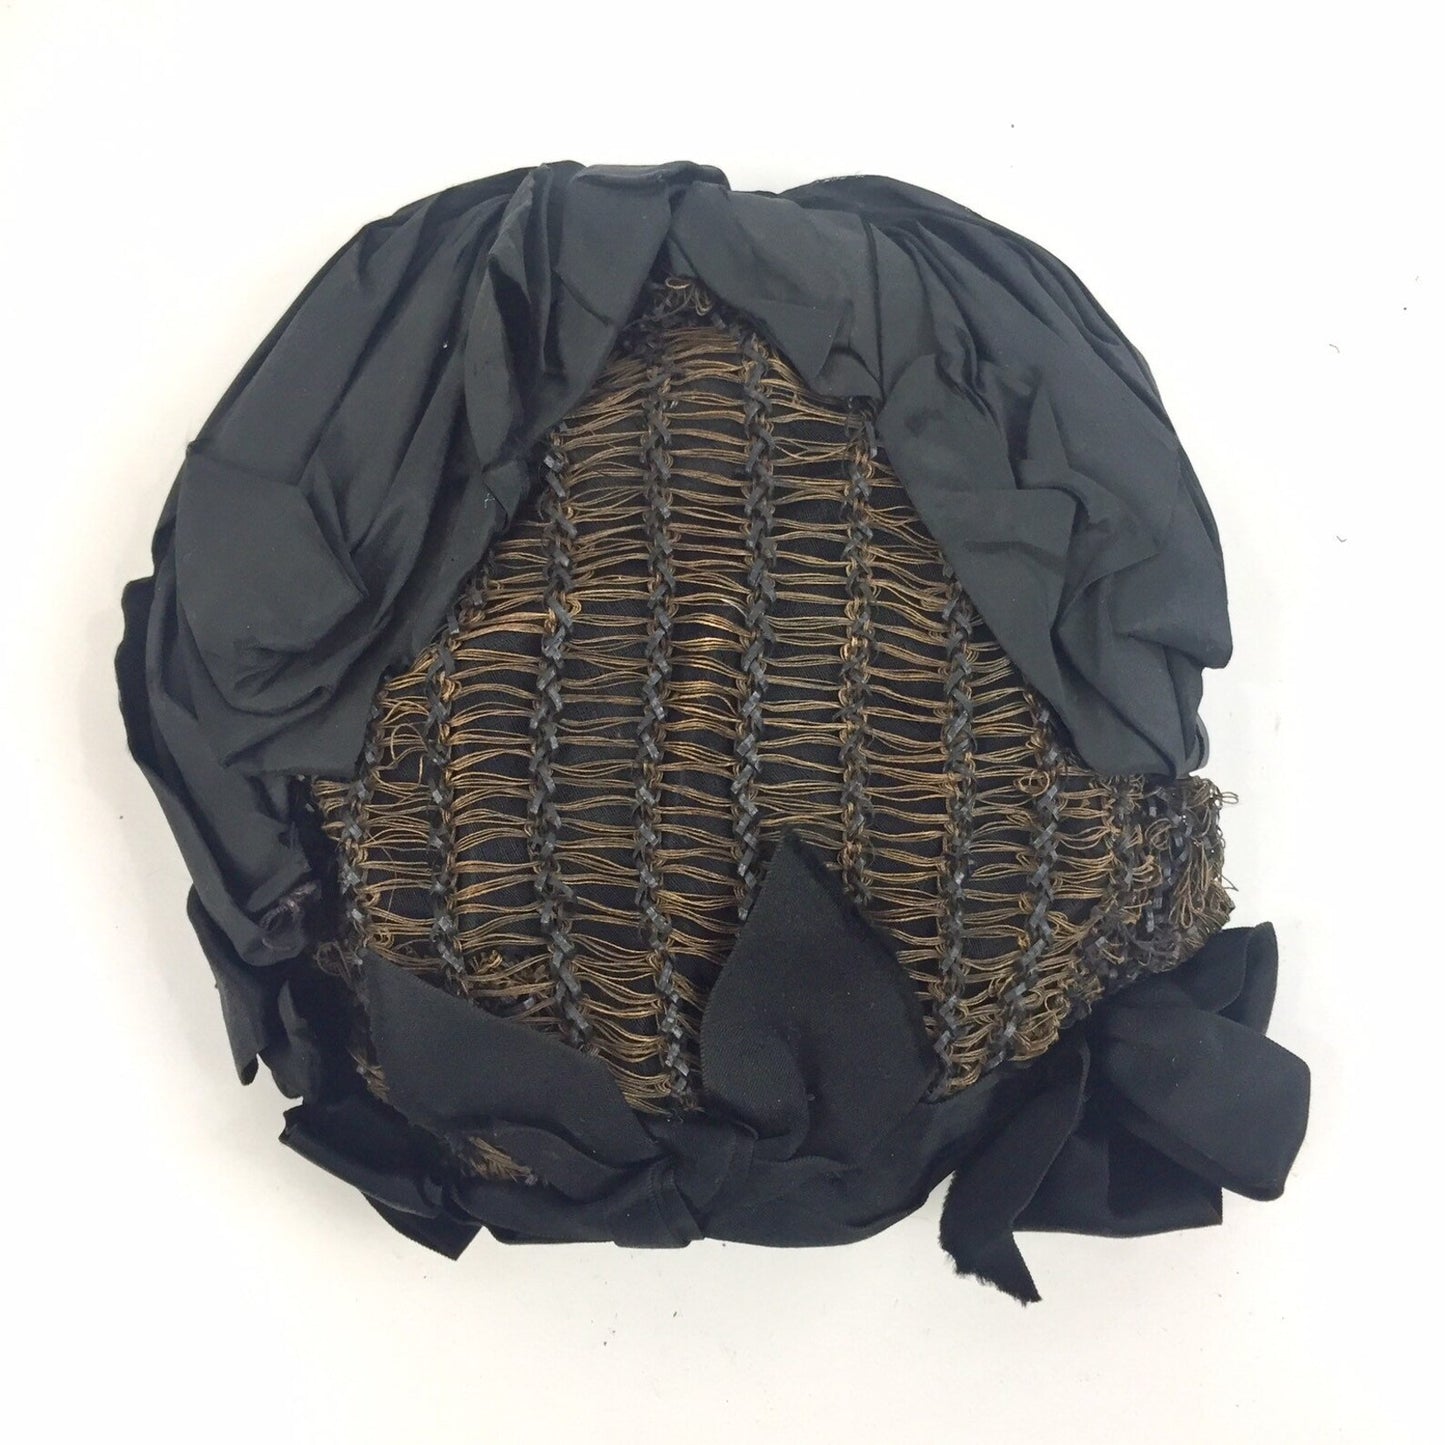 Antique Victorian Black Mourning Bonnet Cap with Brown & Black Ribbon Trim, Strong Wire Frame, Vintage Womens Bonnets